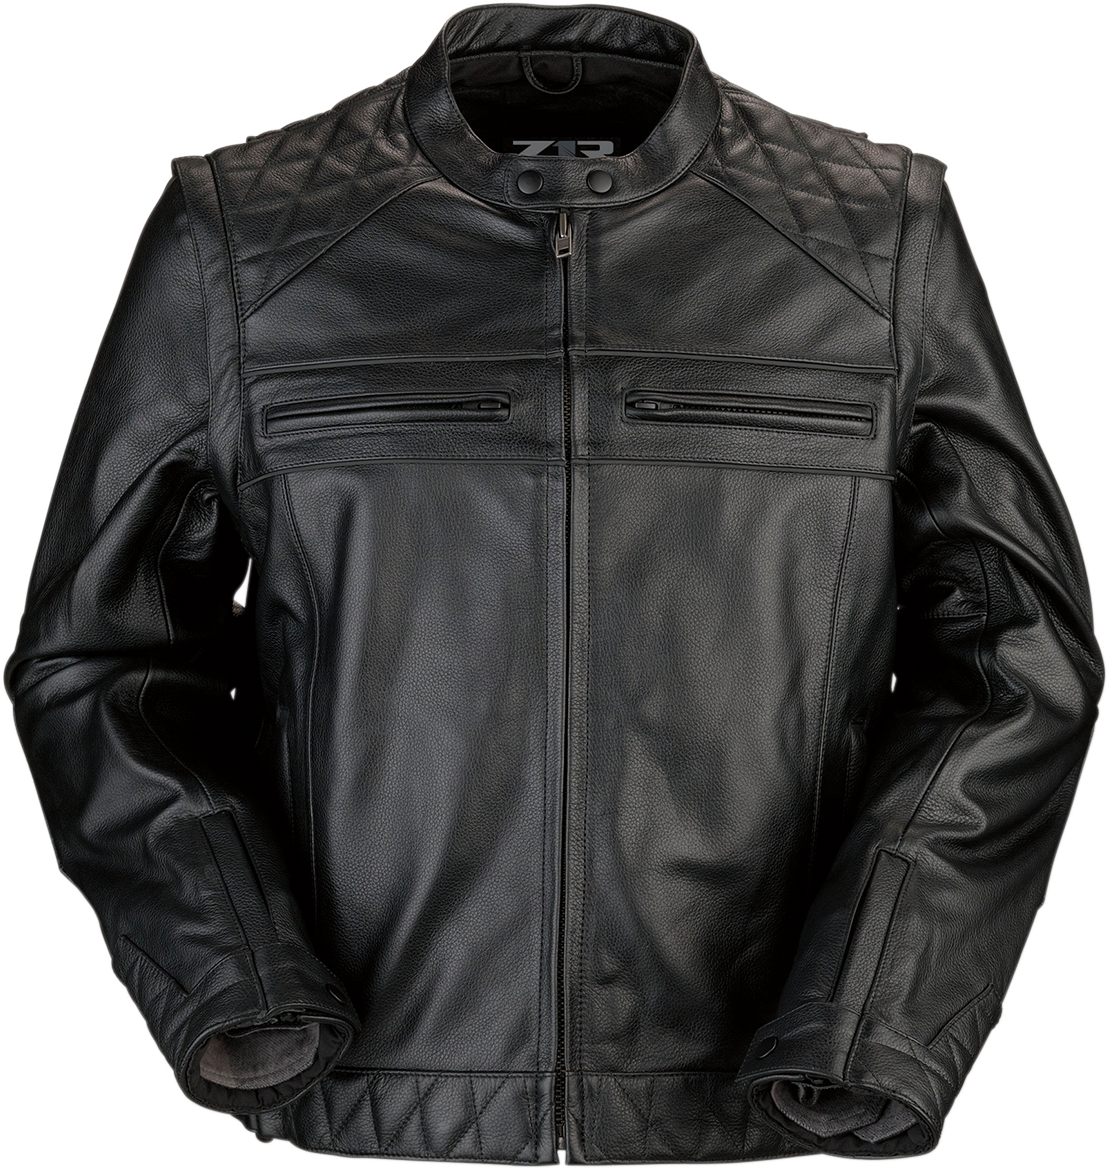 Z1R Ordinance 3 In 1 Jacket - Black - Small 2810-3567